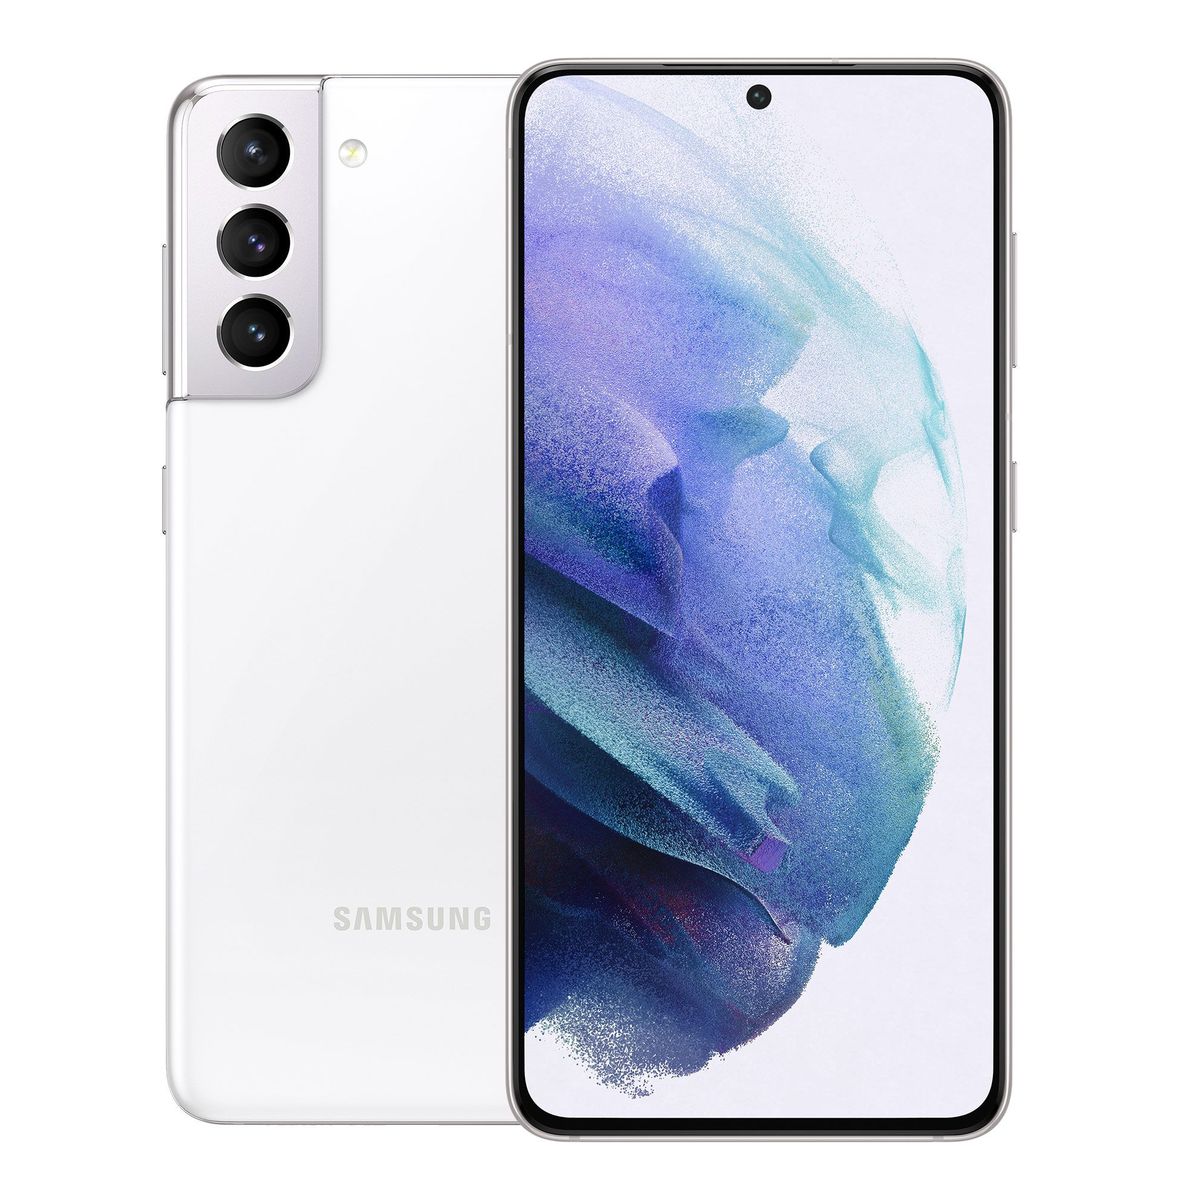 Samsung Galaxy S21 Smartphone 5G 128GB/8GB Phantom White